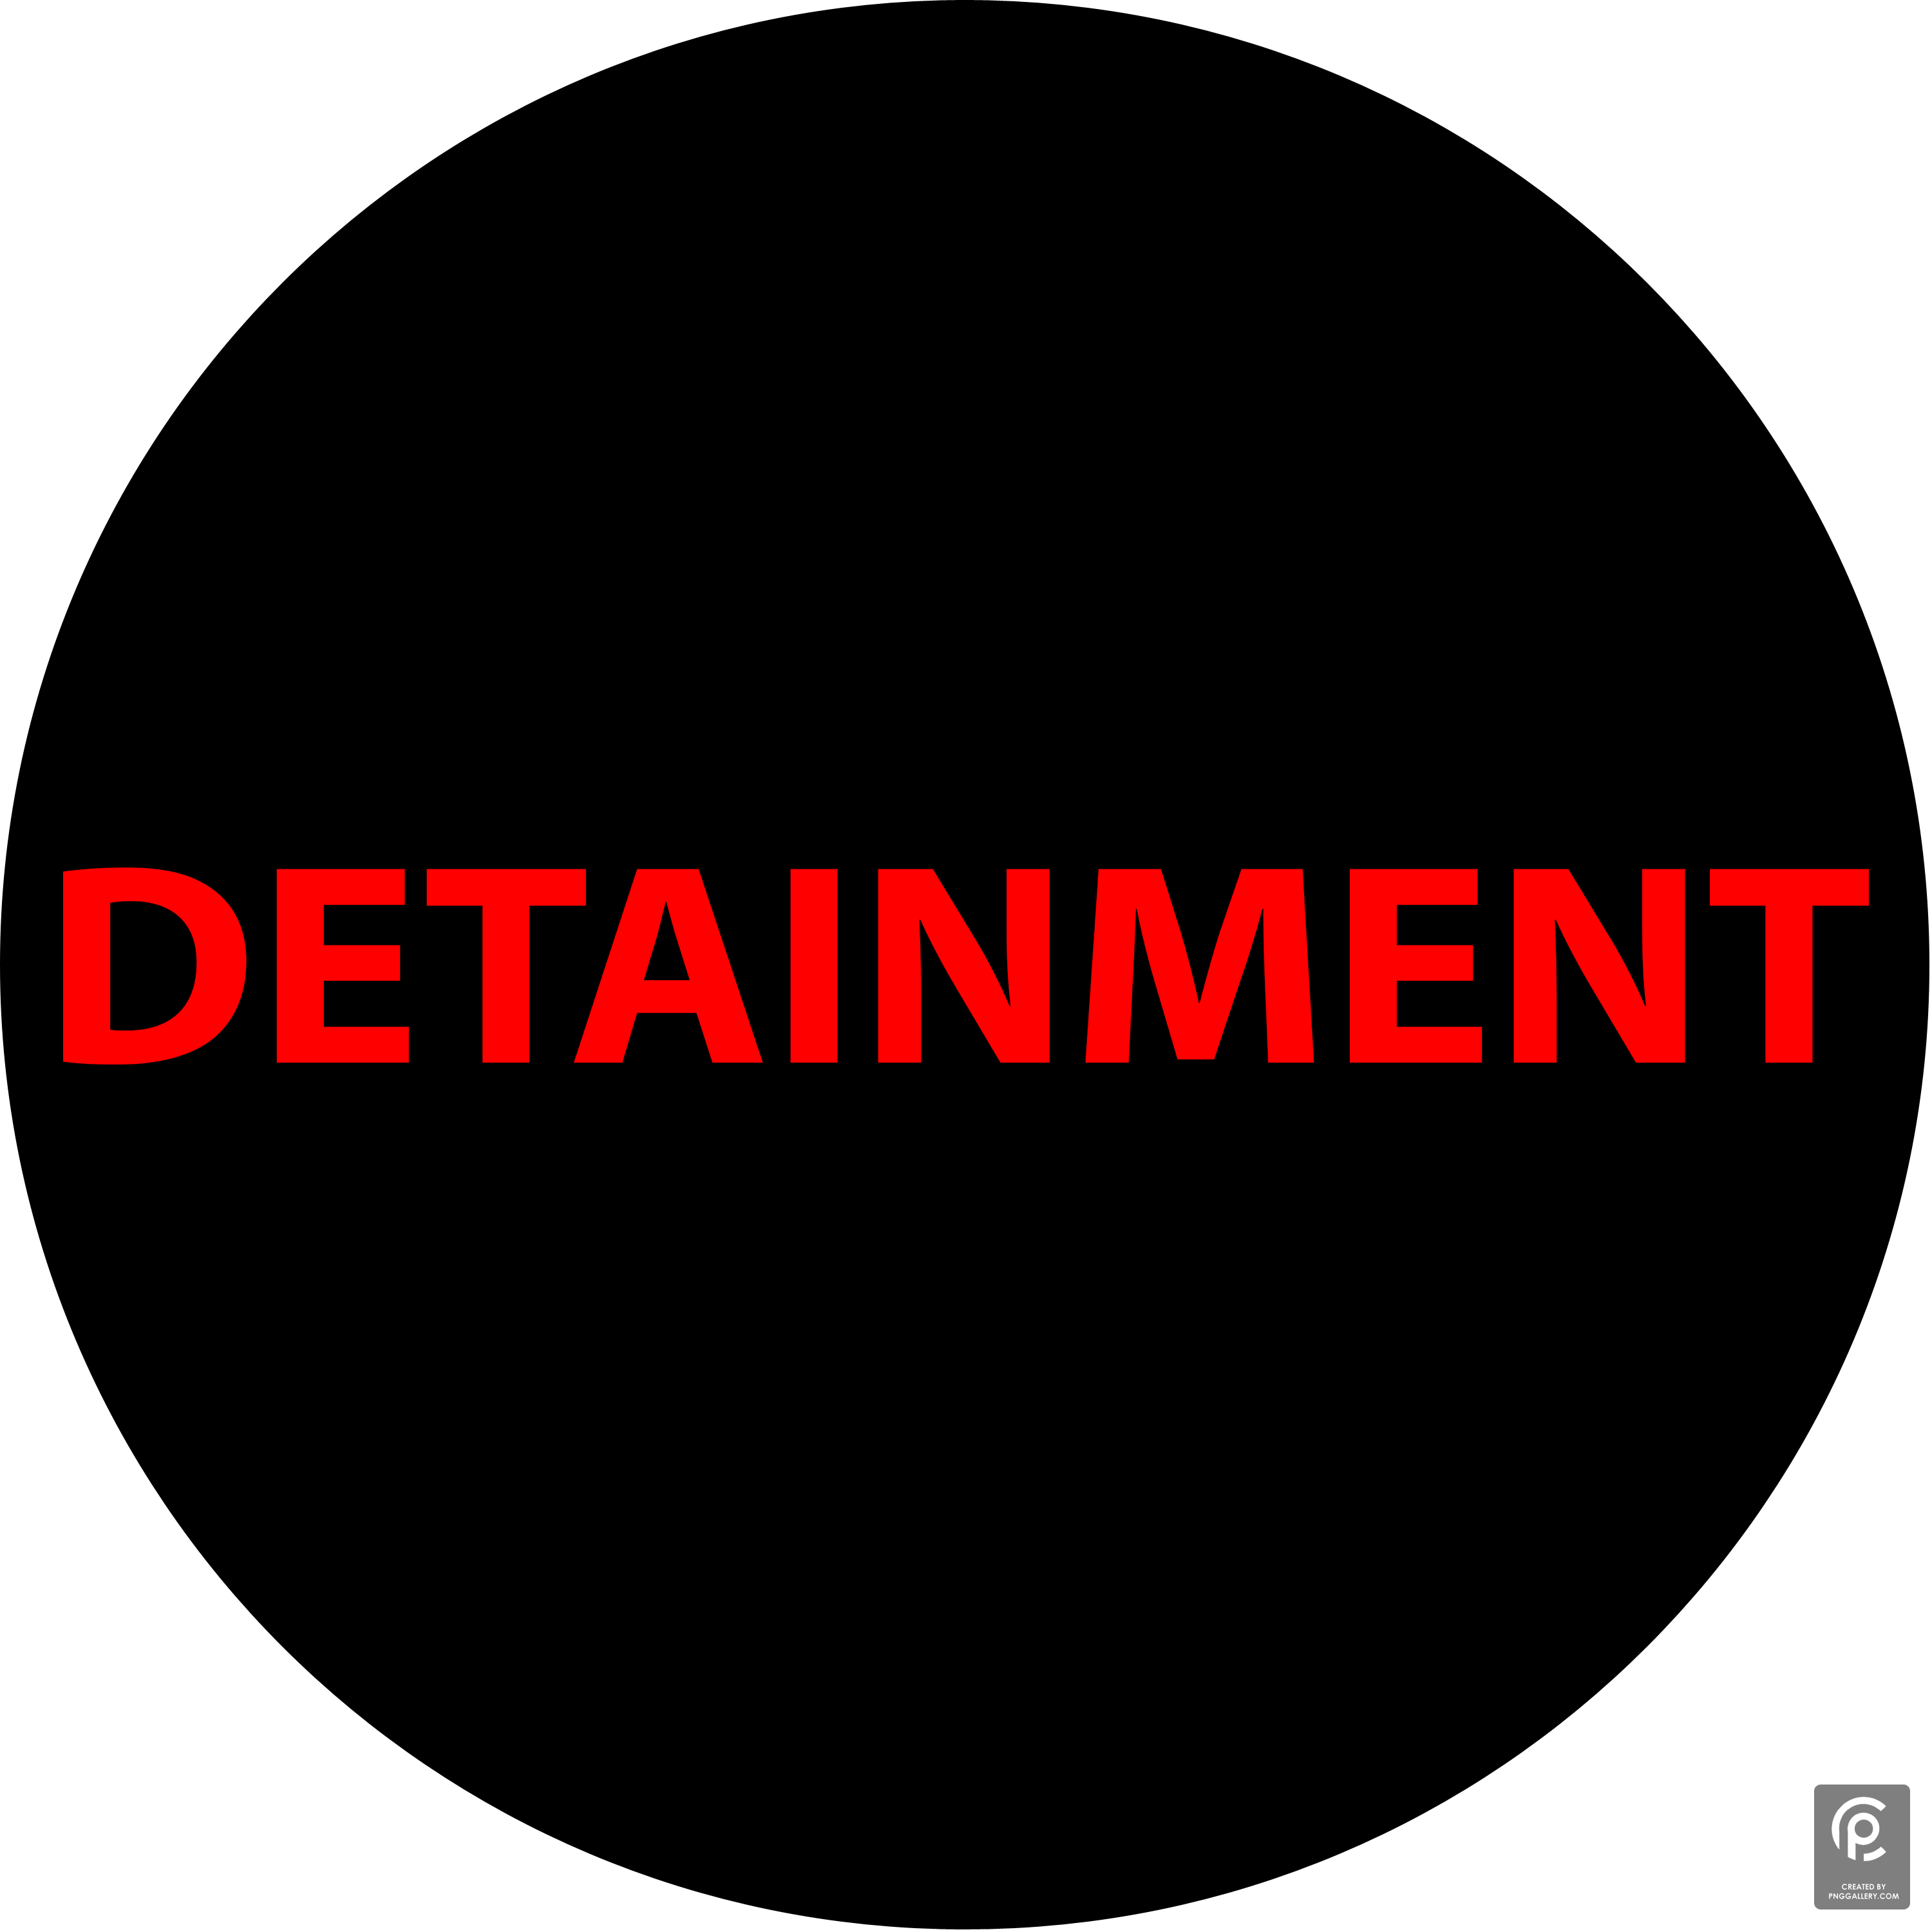 Detainment Logo Transparent Gallery